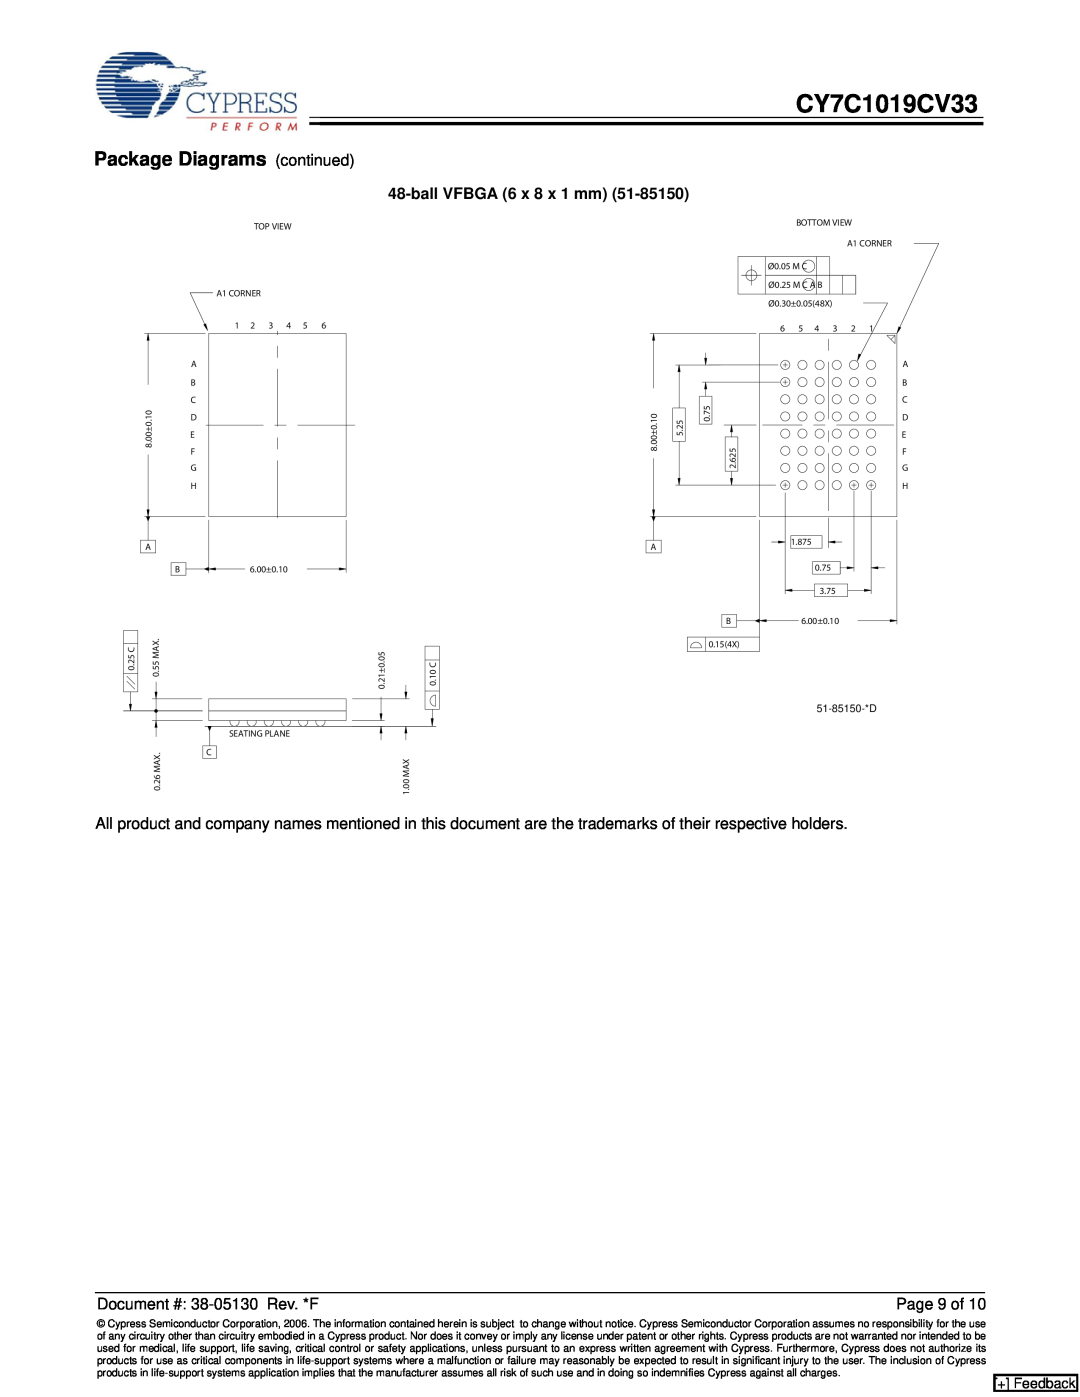 Cypress CY7C1019CV33 manual ball VFBGA 6 x 8 x 1 mm, Package Diagrams continued, Page 9 of, + Feedback 